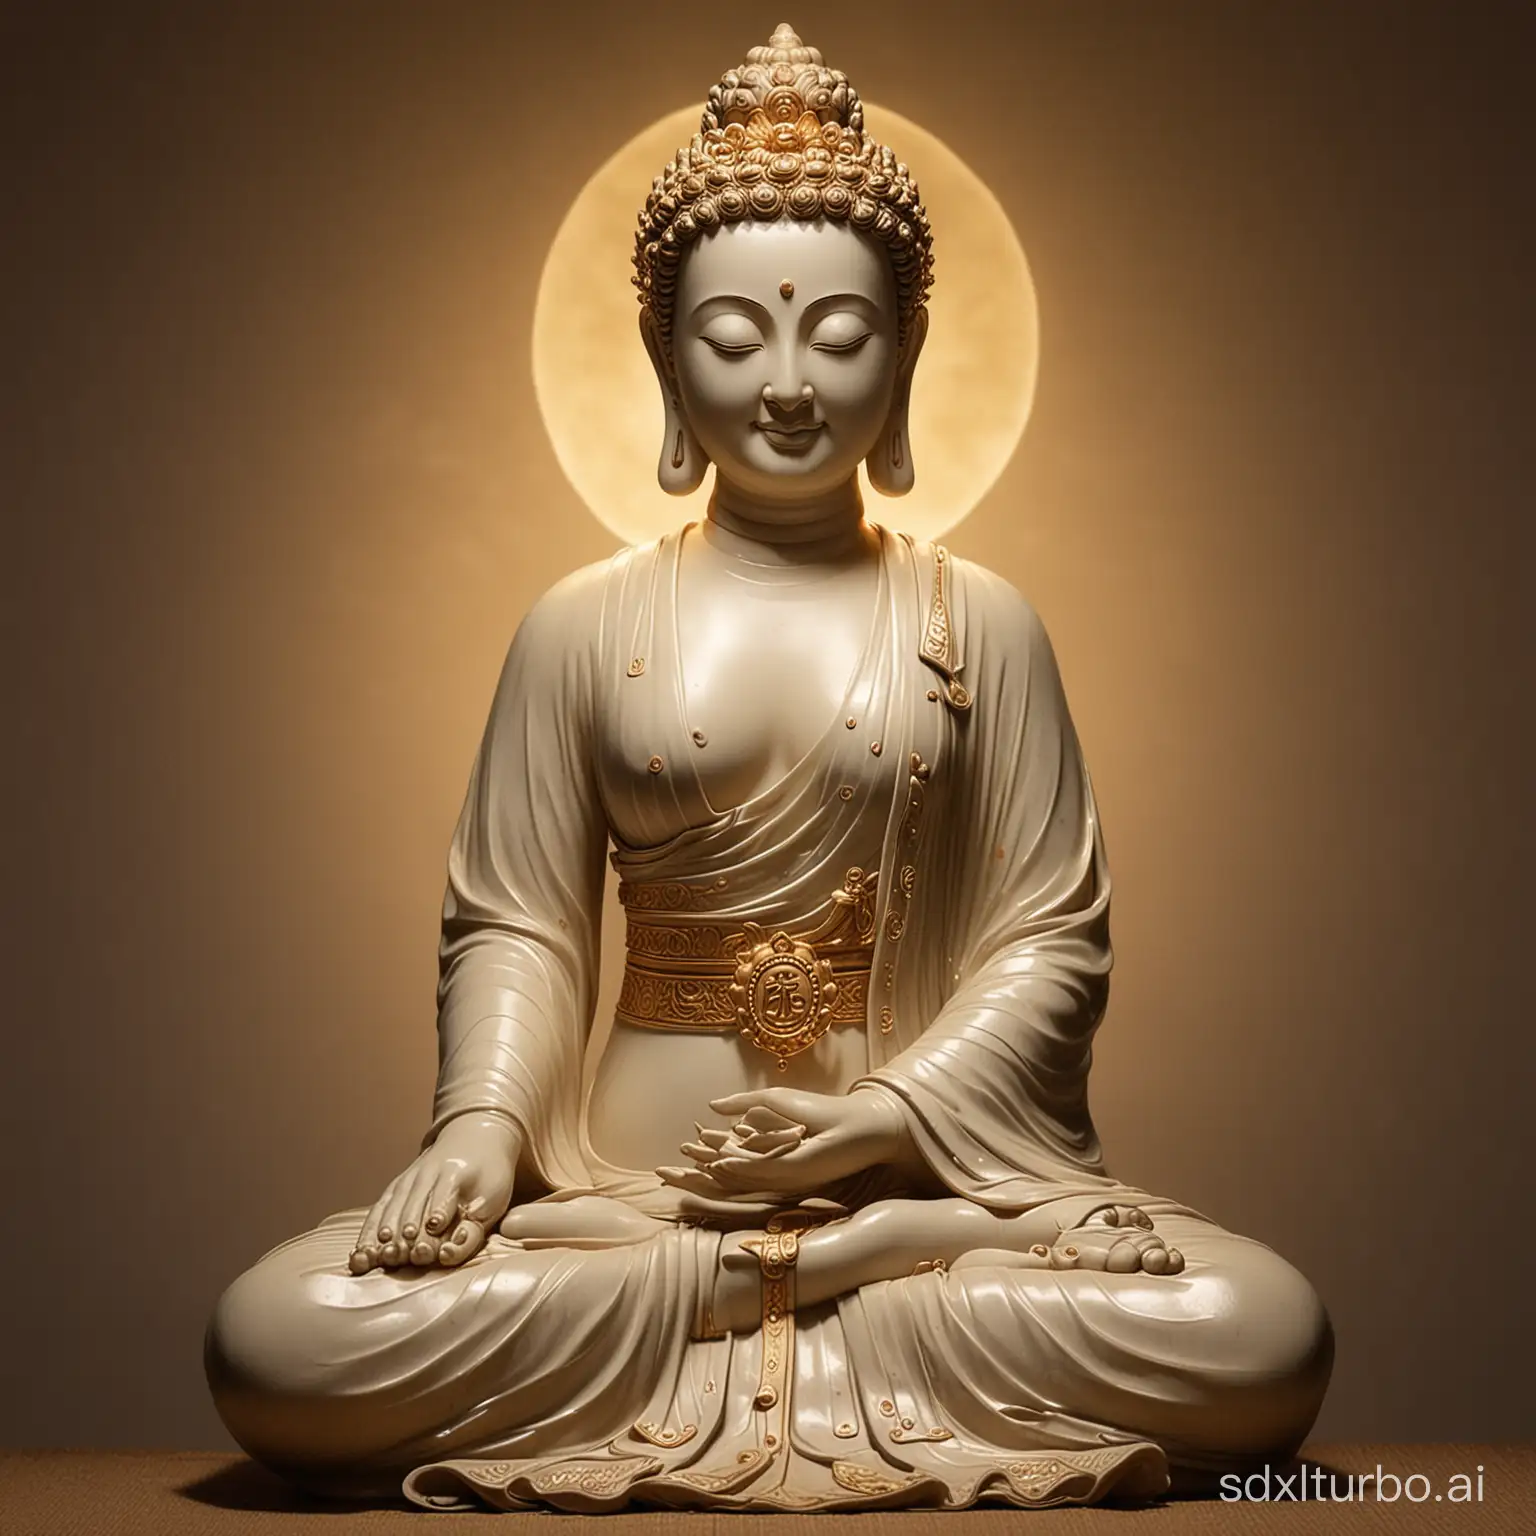 Smiling-Guanyin-Bodhisattva-in-Meditative-Pose-with-Buddha-Light